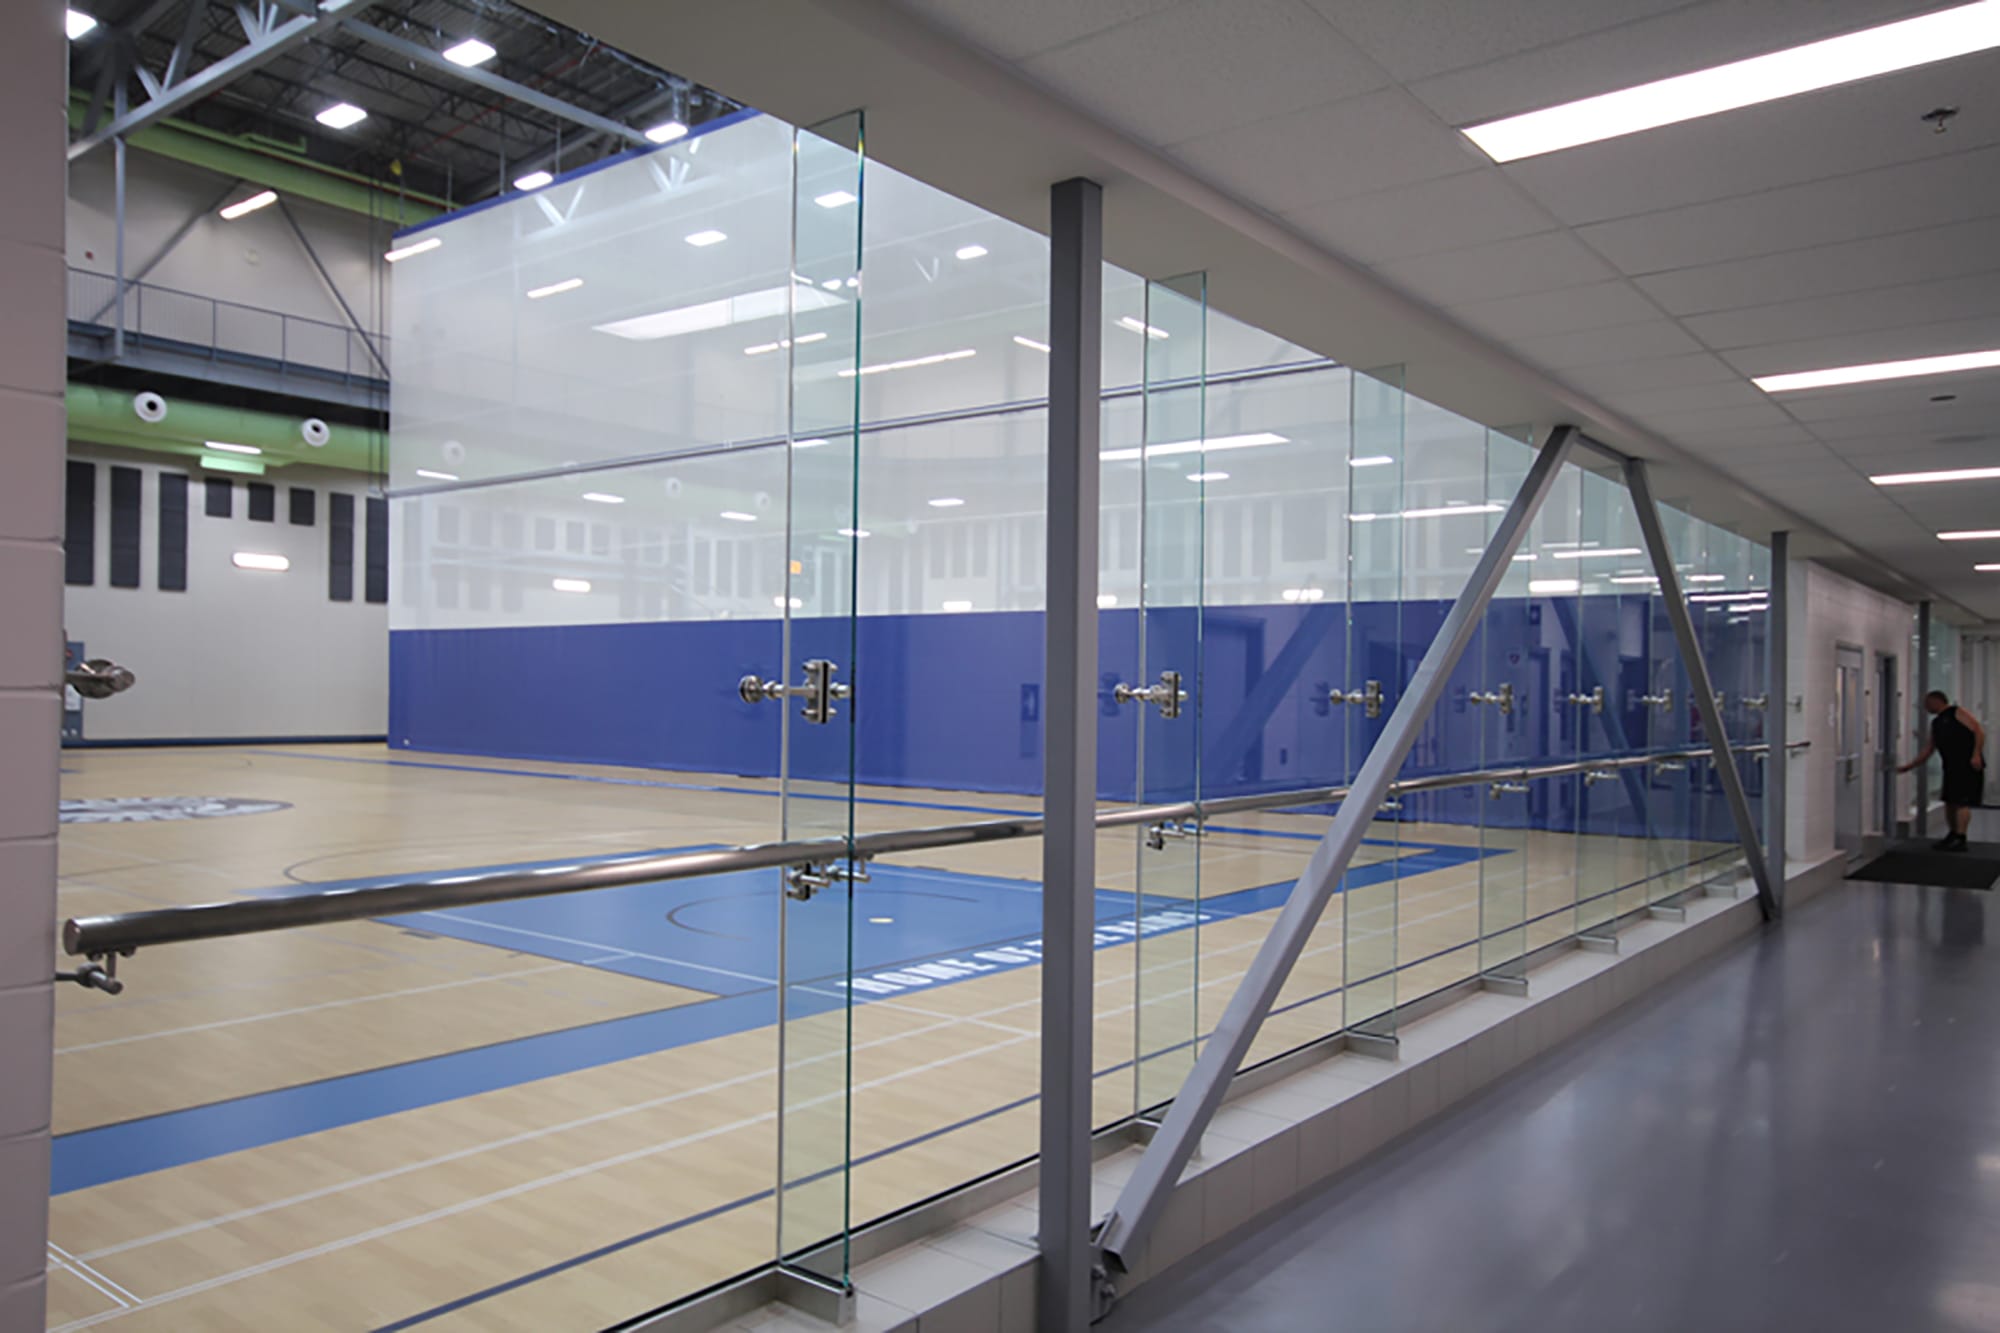 St-Francis Xavier Sports Centre interior court